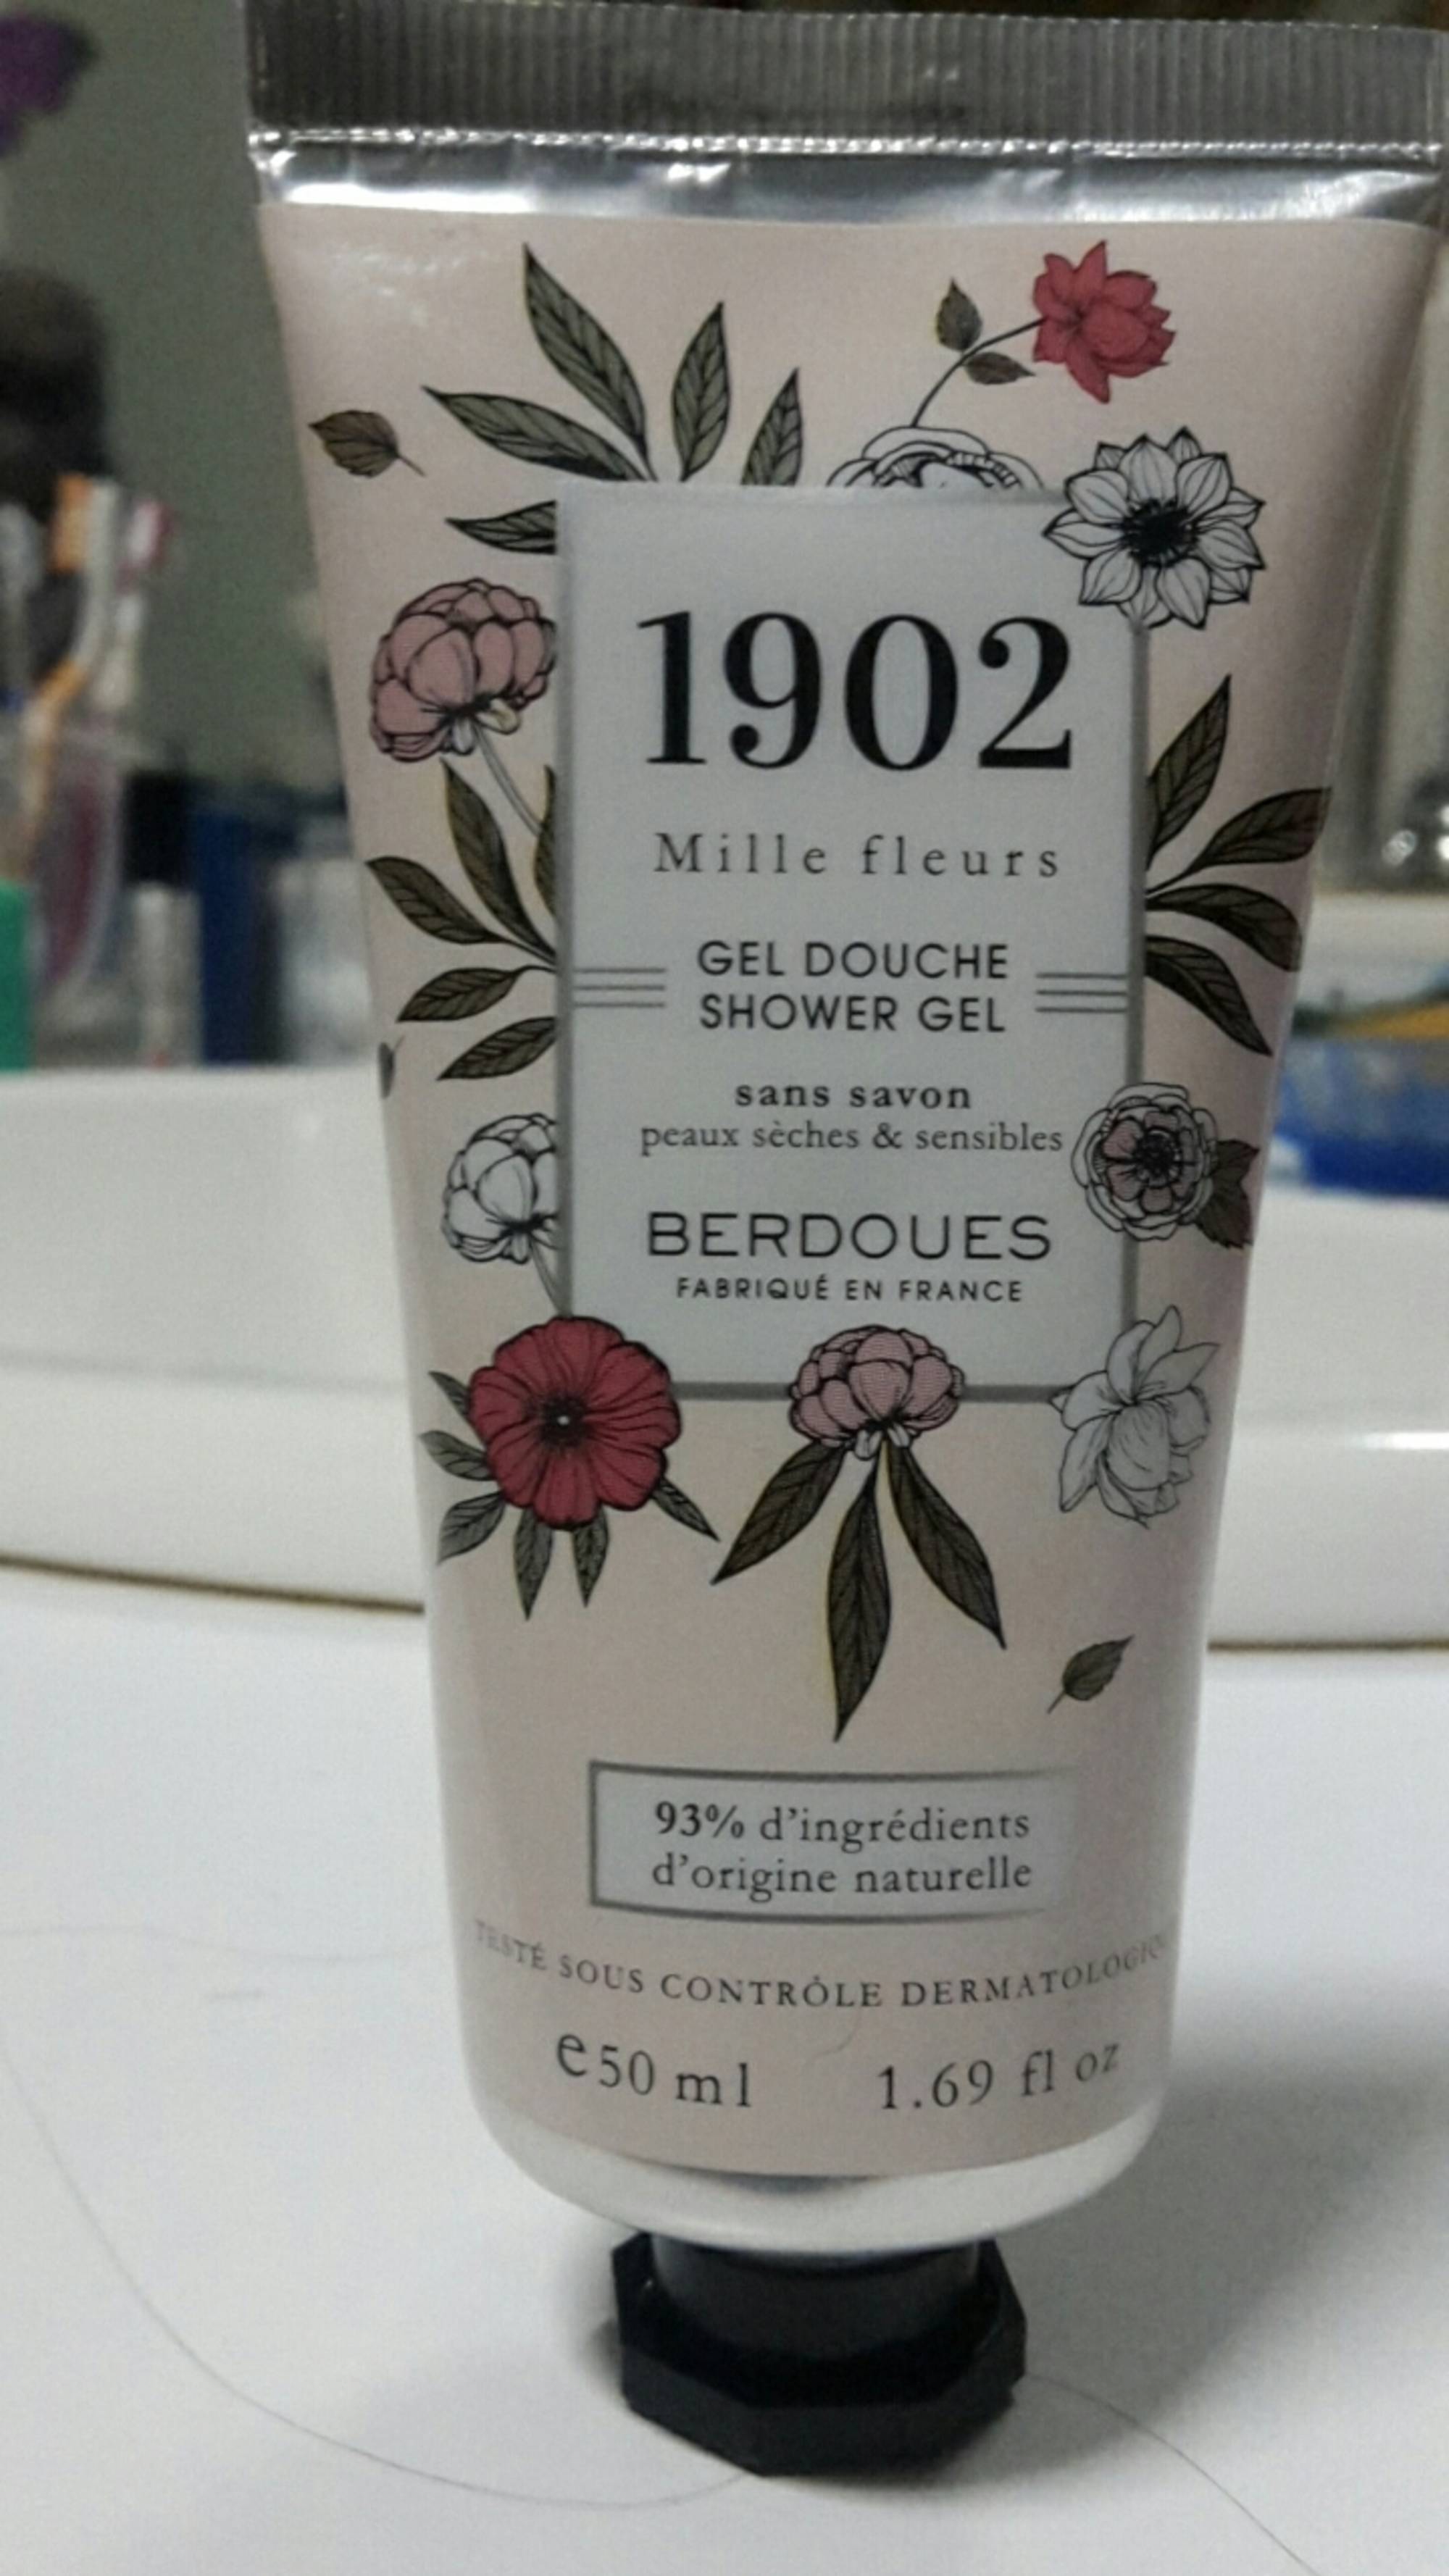 BERDOUES - 1902 mille fleurs - Gel douche